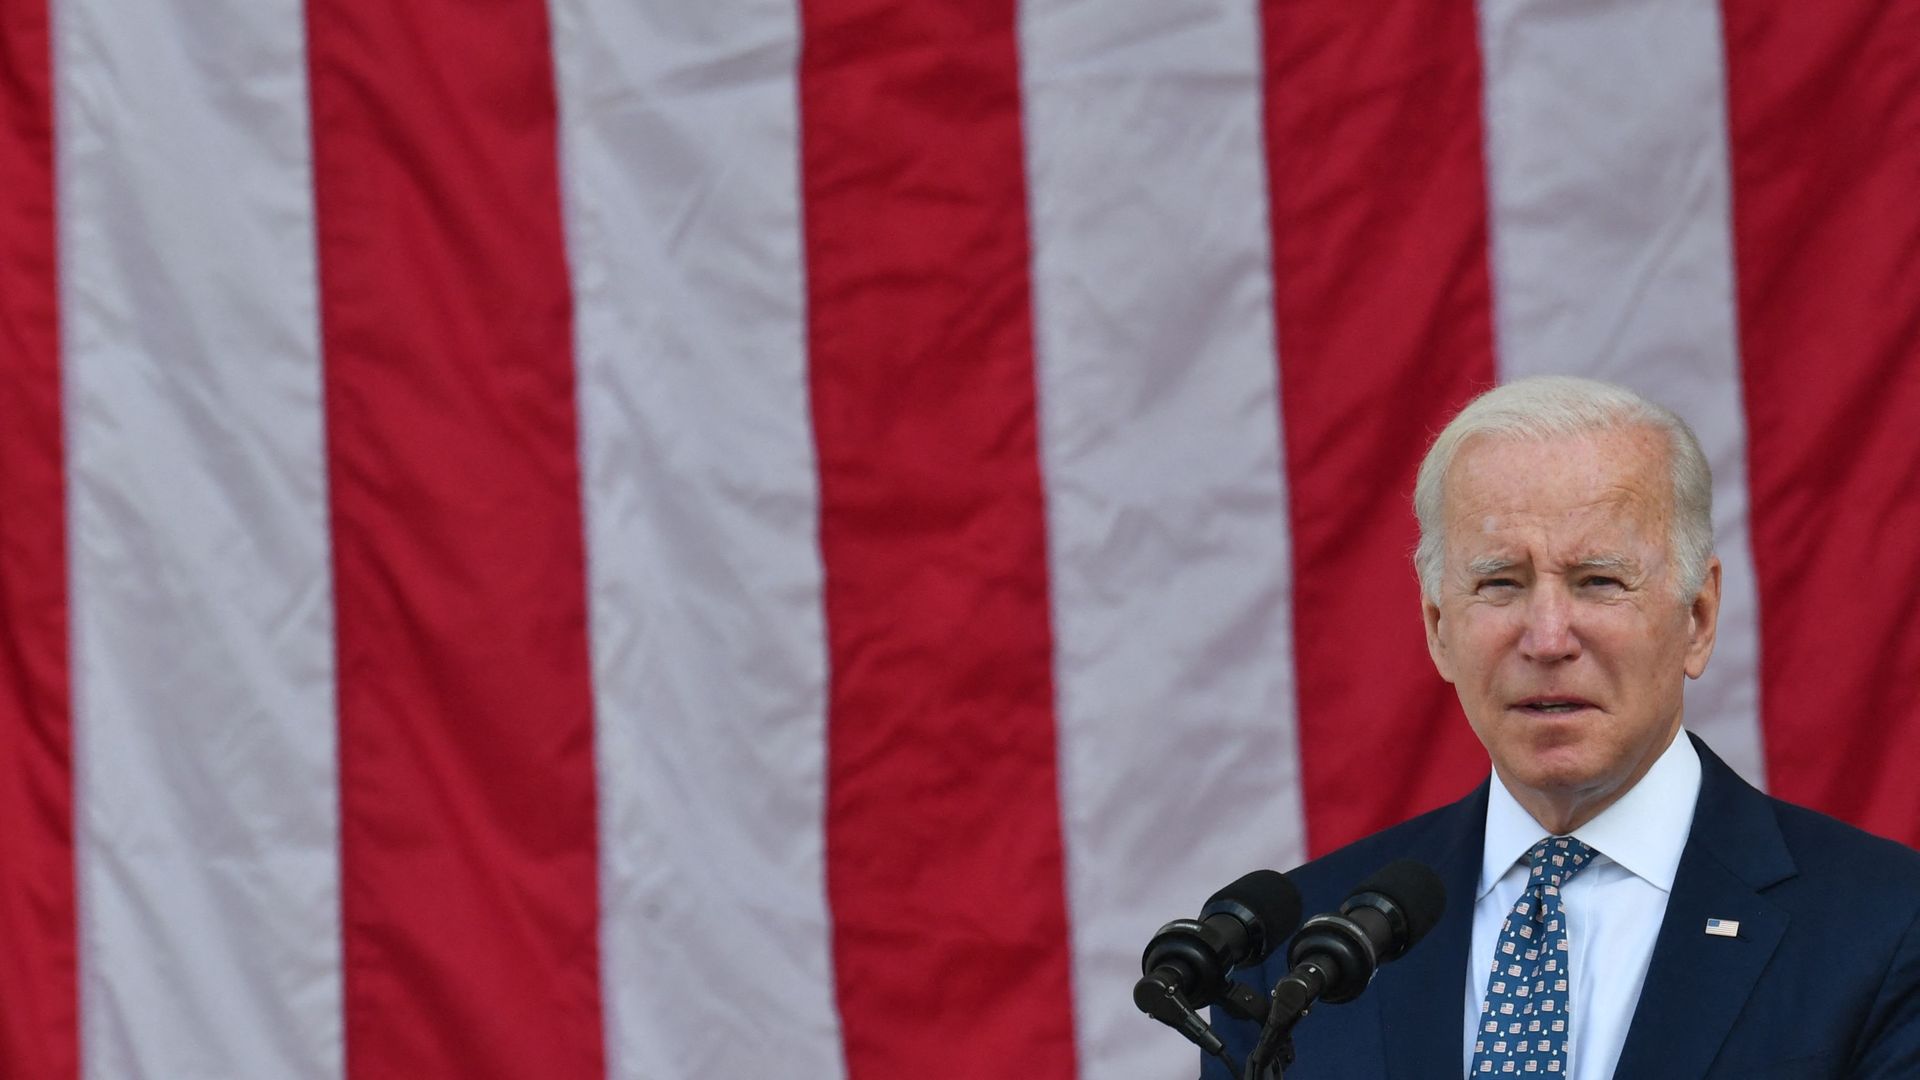 President Biden is seen delivering Veterans Day remarks at Arlington National Cemetery.